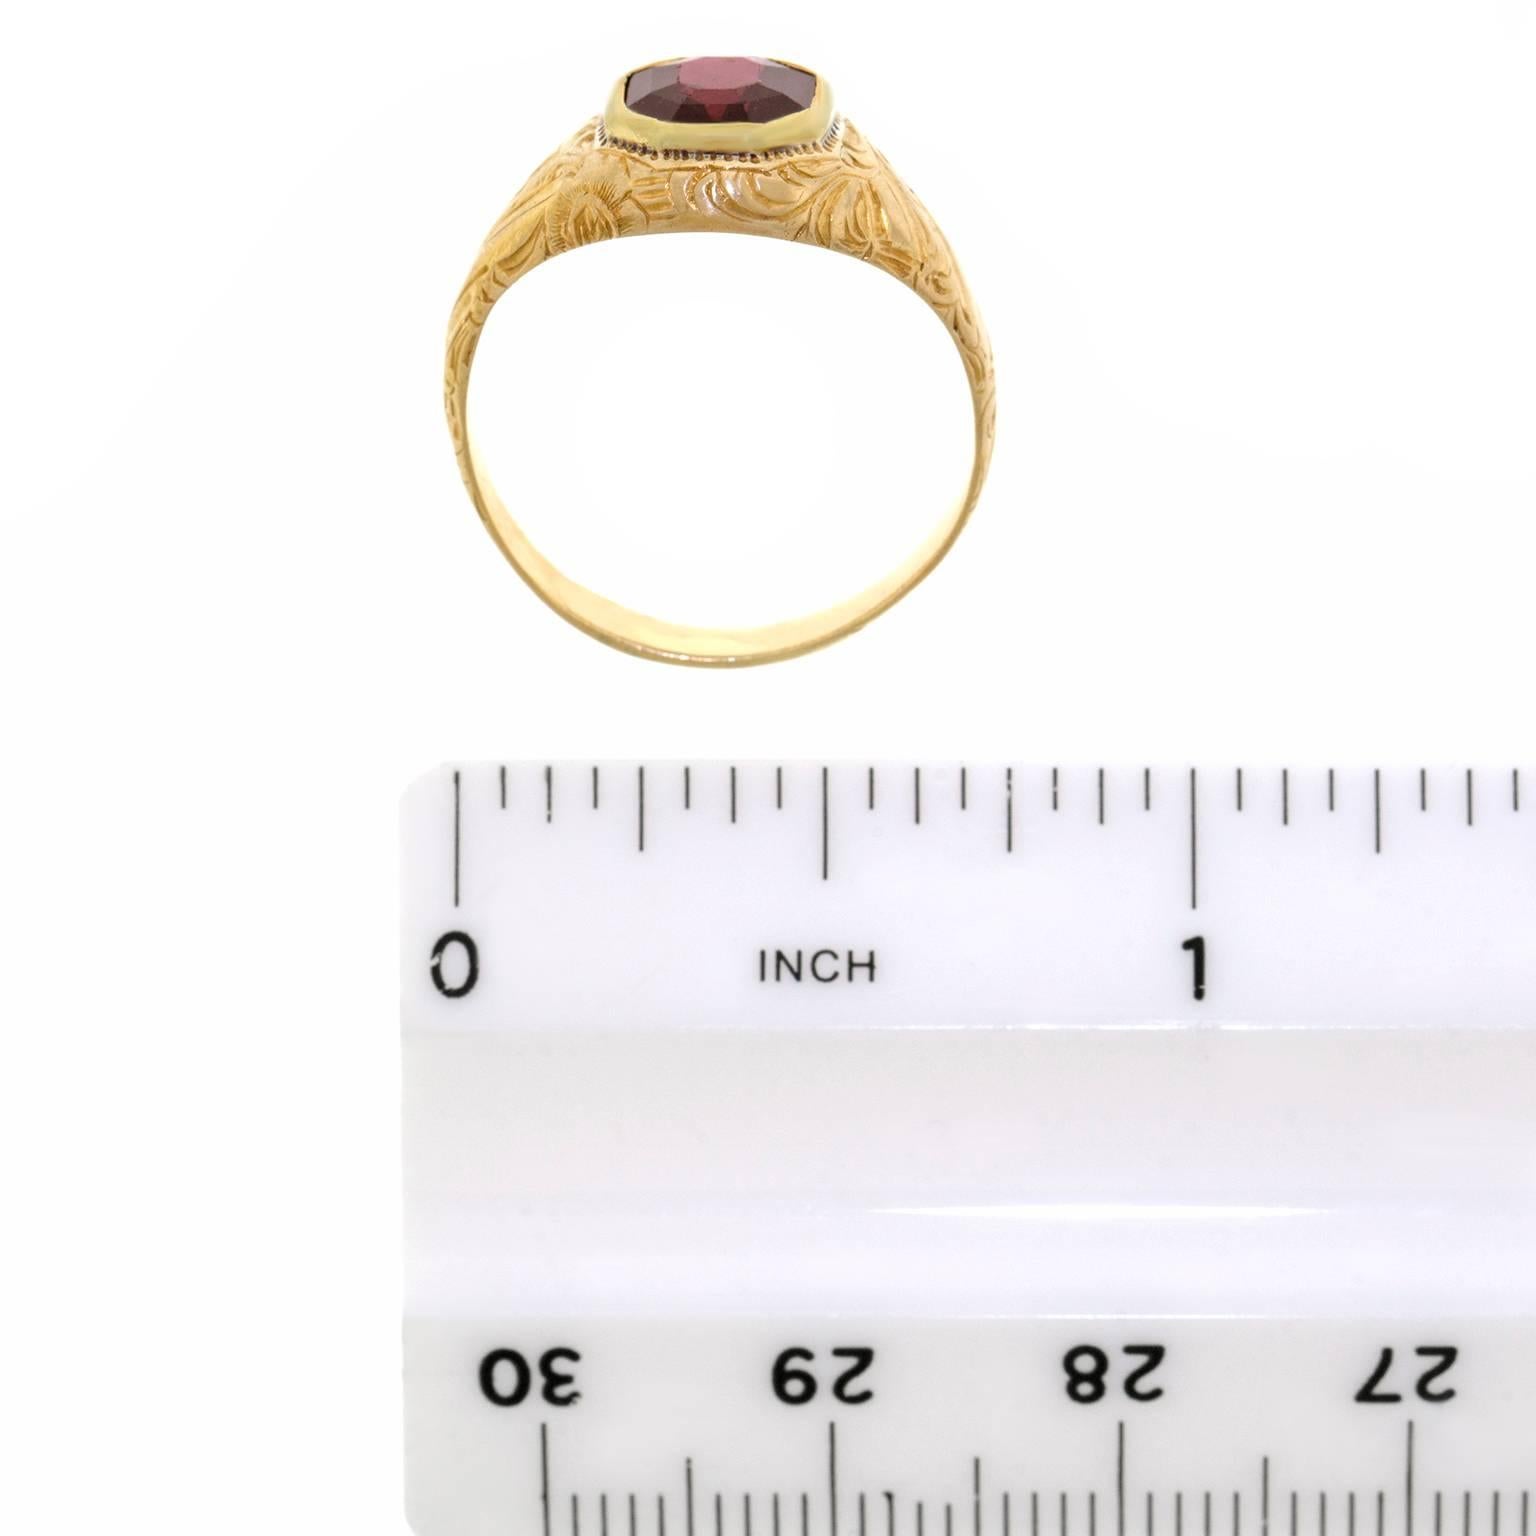 Antique Garnet Gold Ring 2